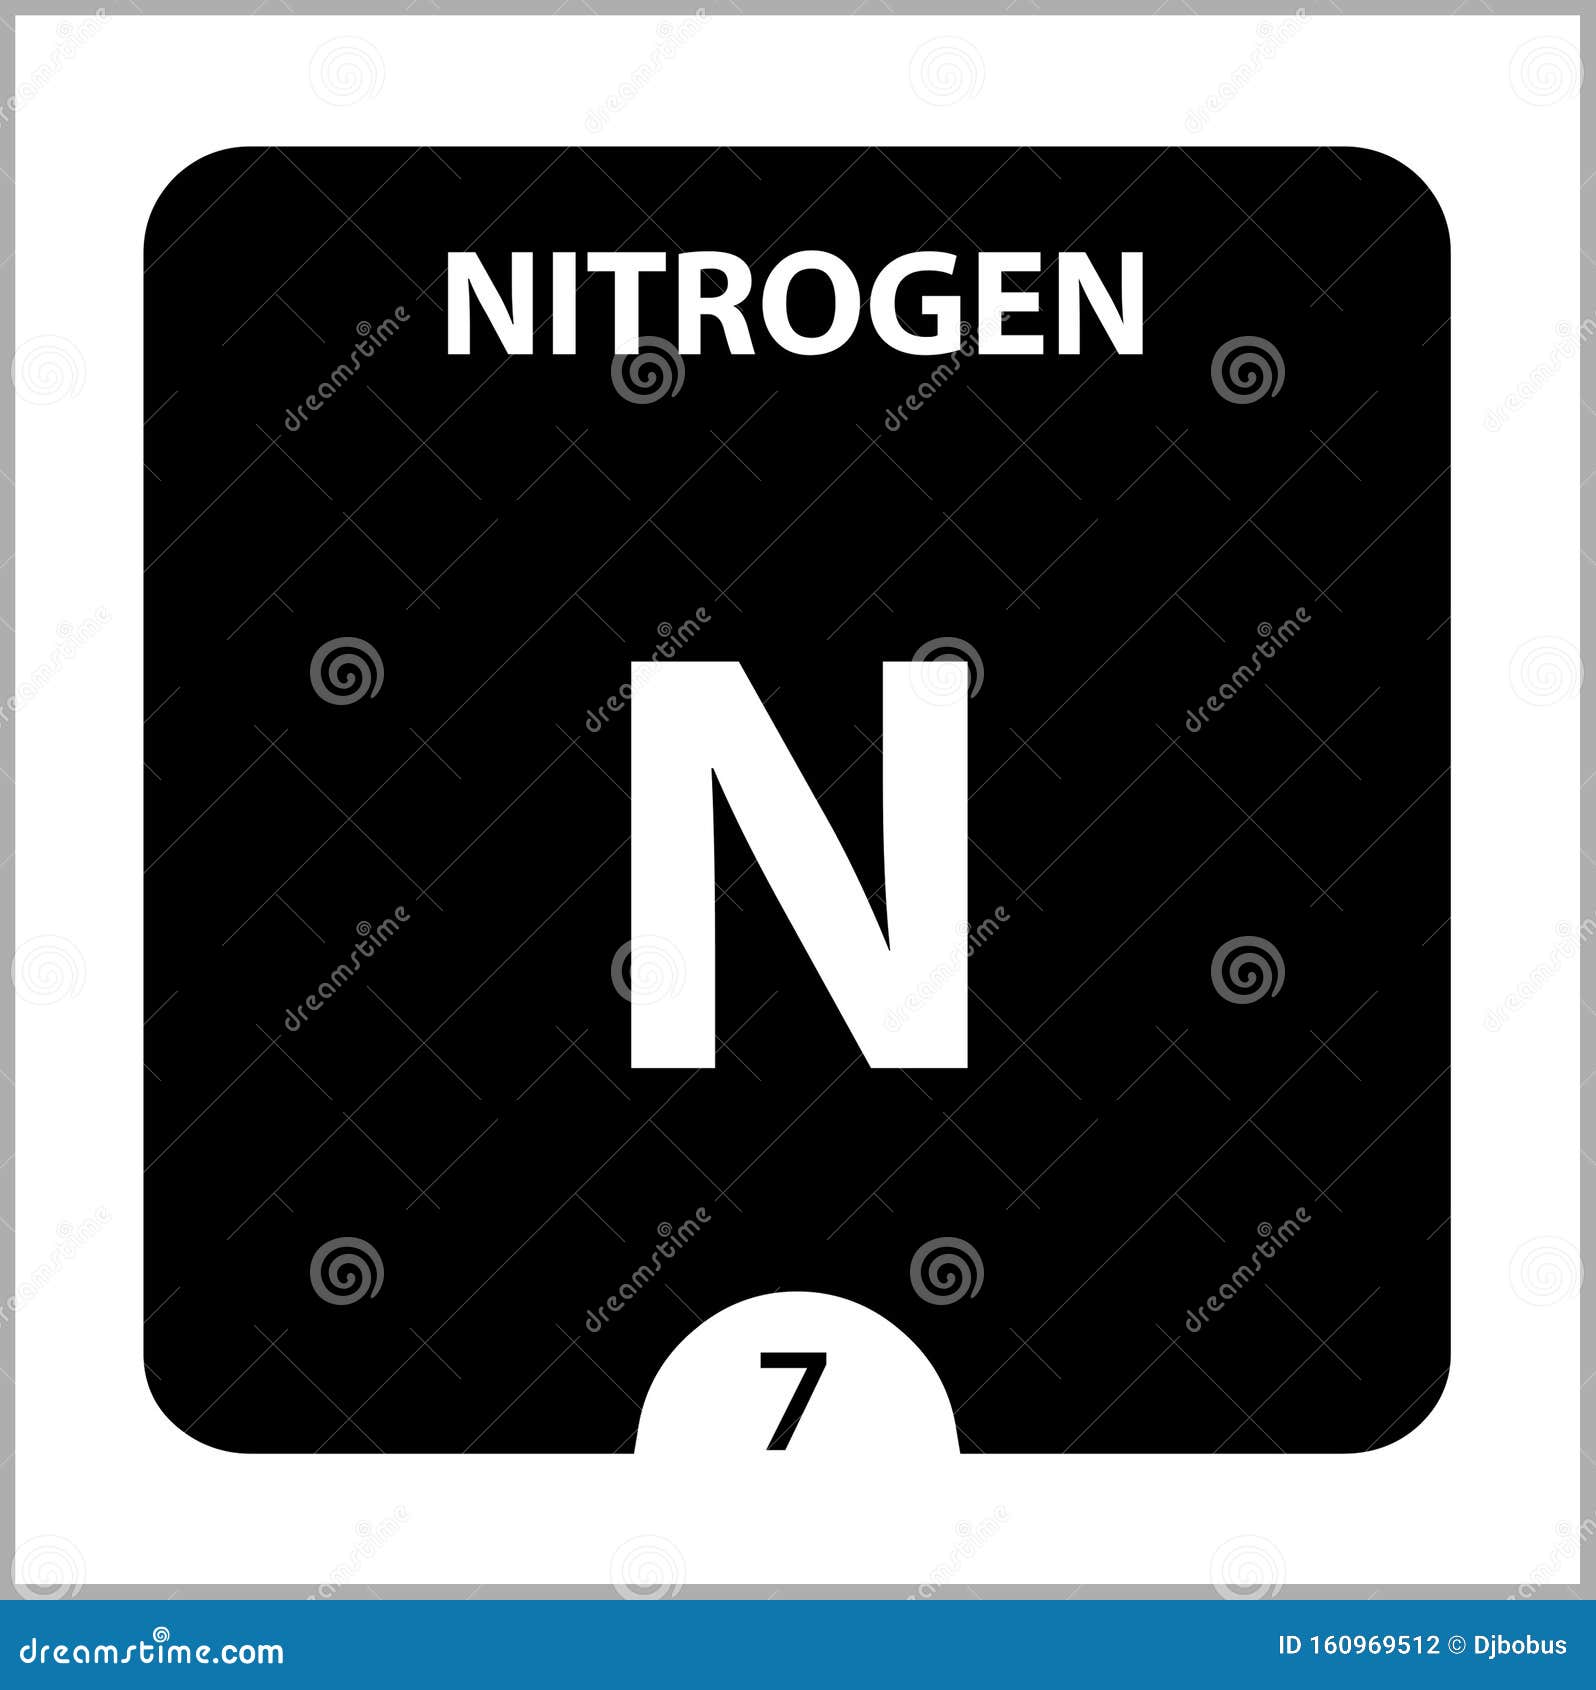 Nitrogen Symbol. Sign Nitrogen with Atomic Number and Atomic ...